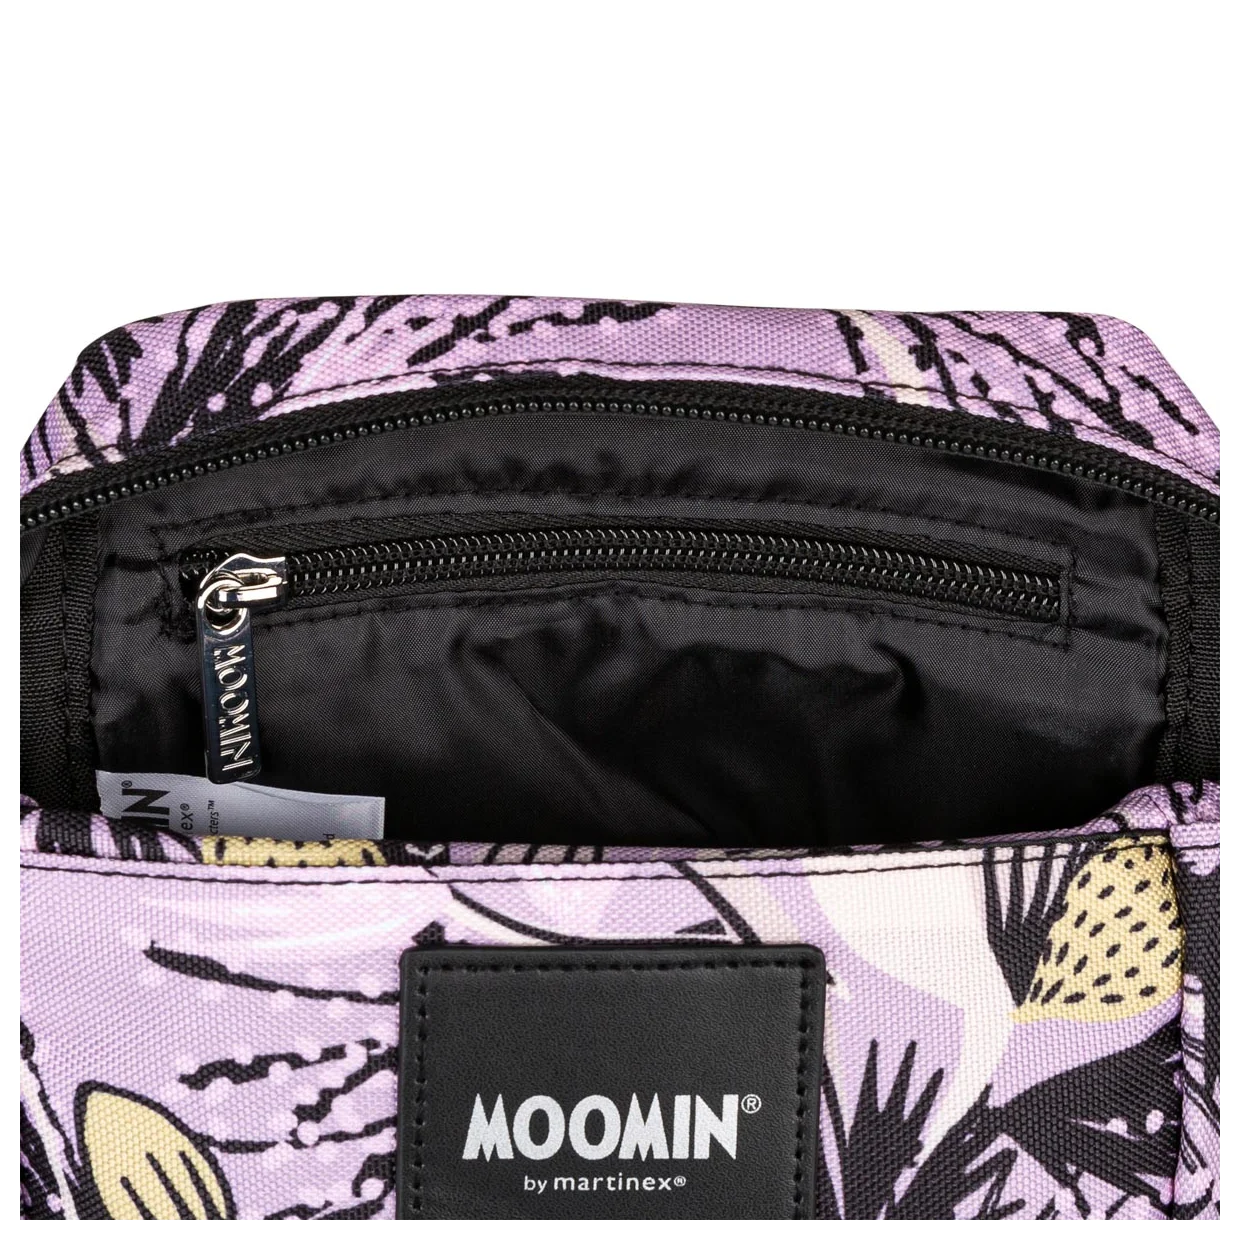 Moomin by martinex - Taska bud lilac